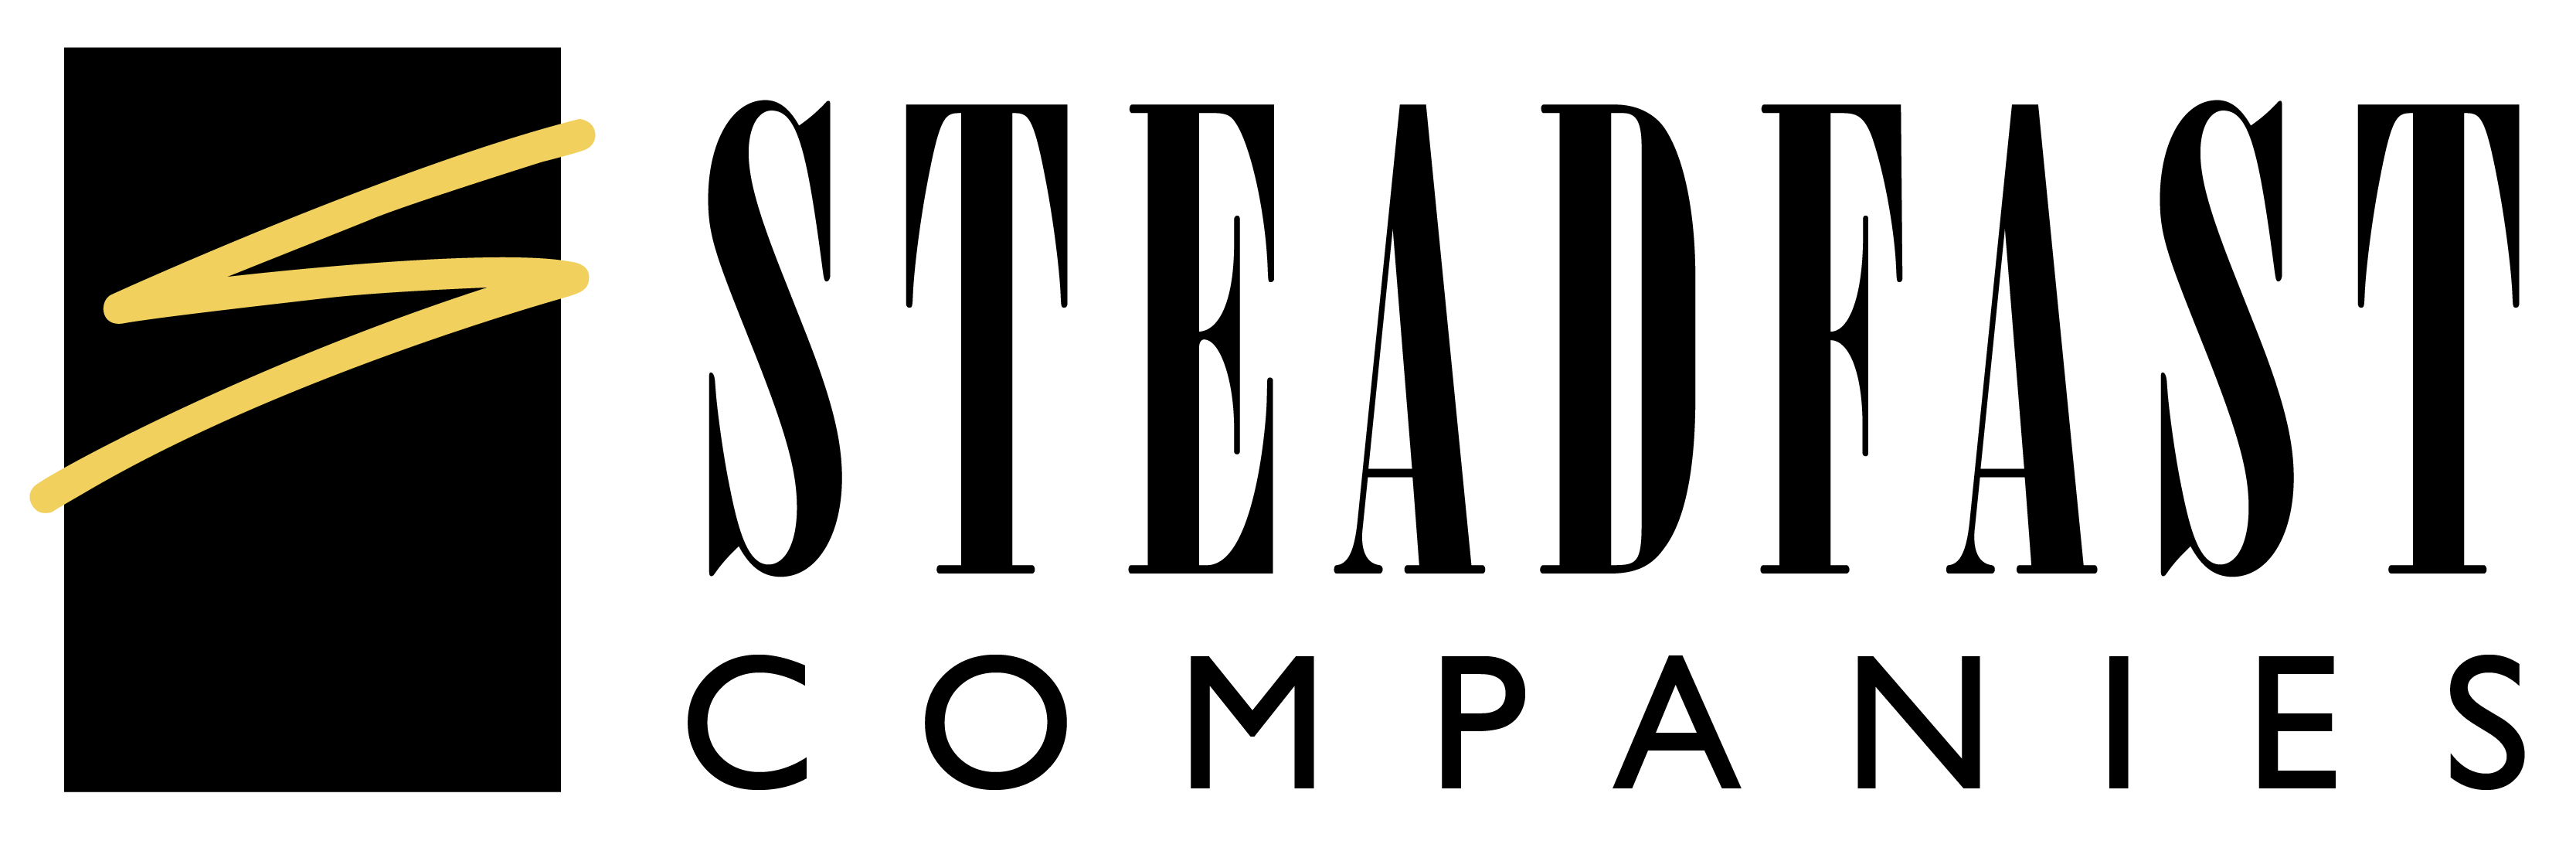 SteadfastCo_Logo-Horizontal (002)